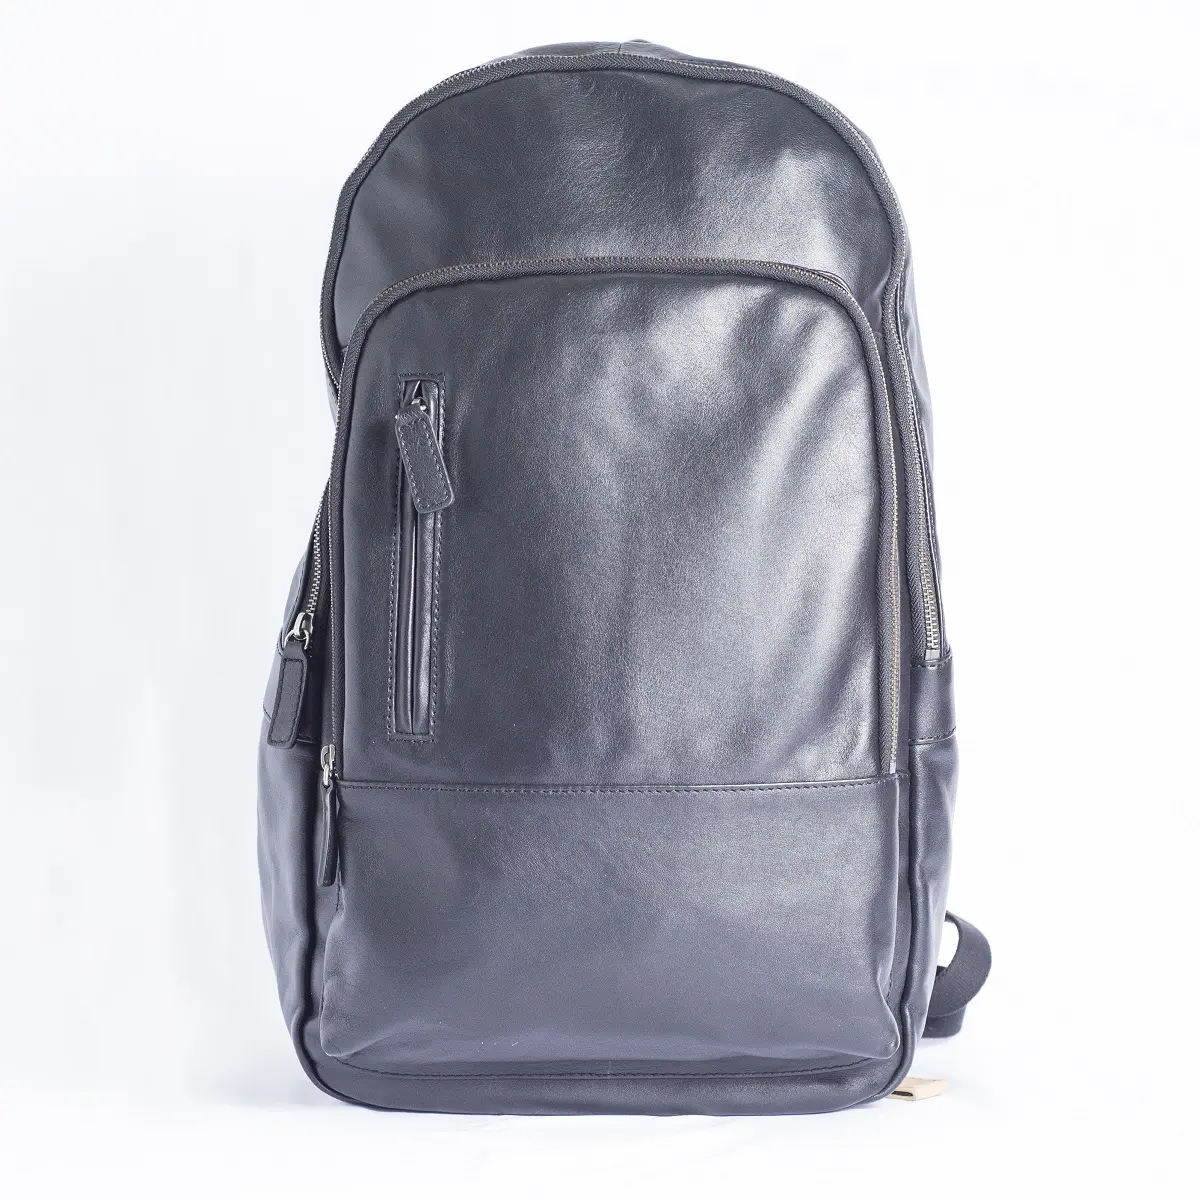 USB Charger Backpack Anti Theft Smart Laptop Backpack Bag Large Capacity Multifunction Nylon Pink Soft Fashion Black Waterproof